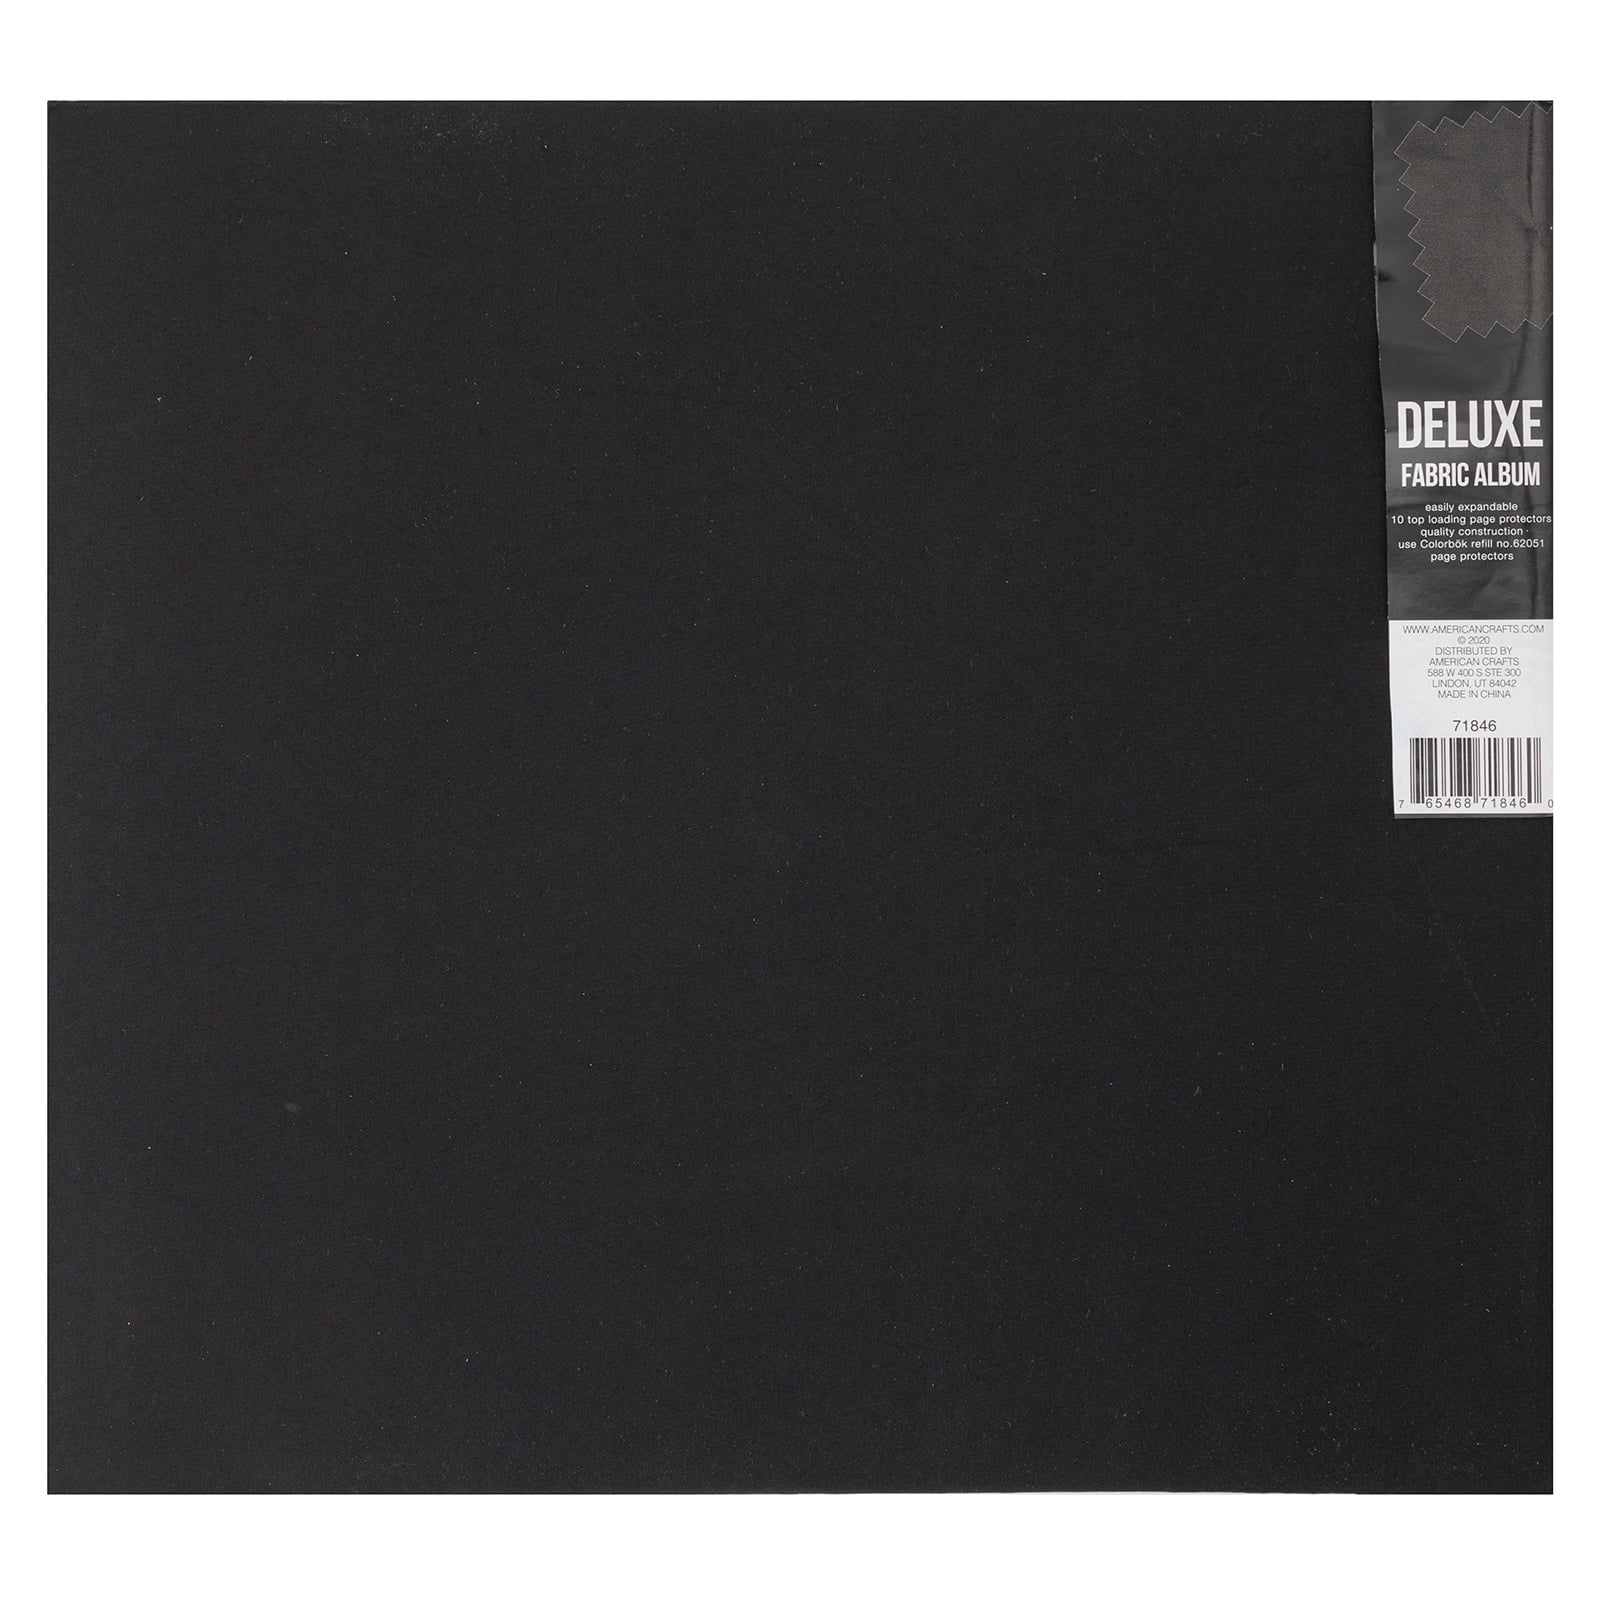 Designer Studio Scrapbook Album 12x12 Black & White post bound refillable  NEW